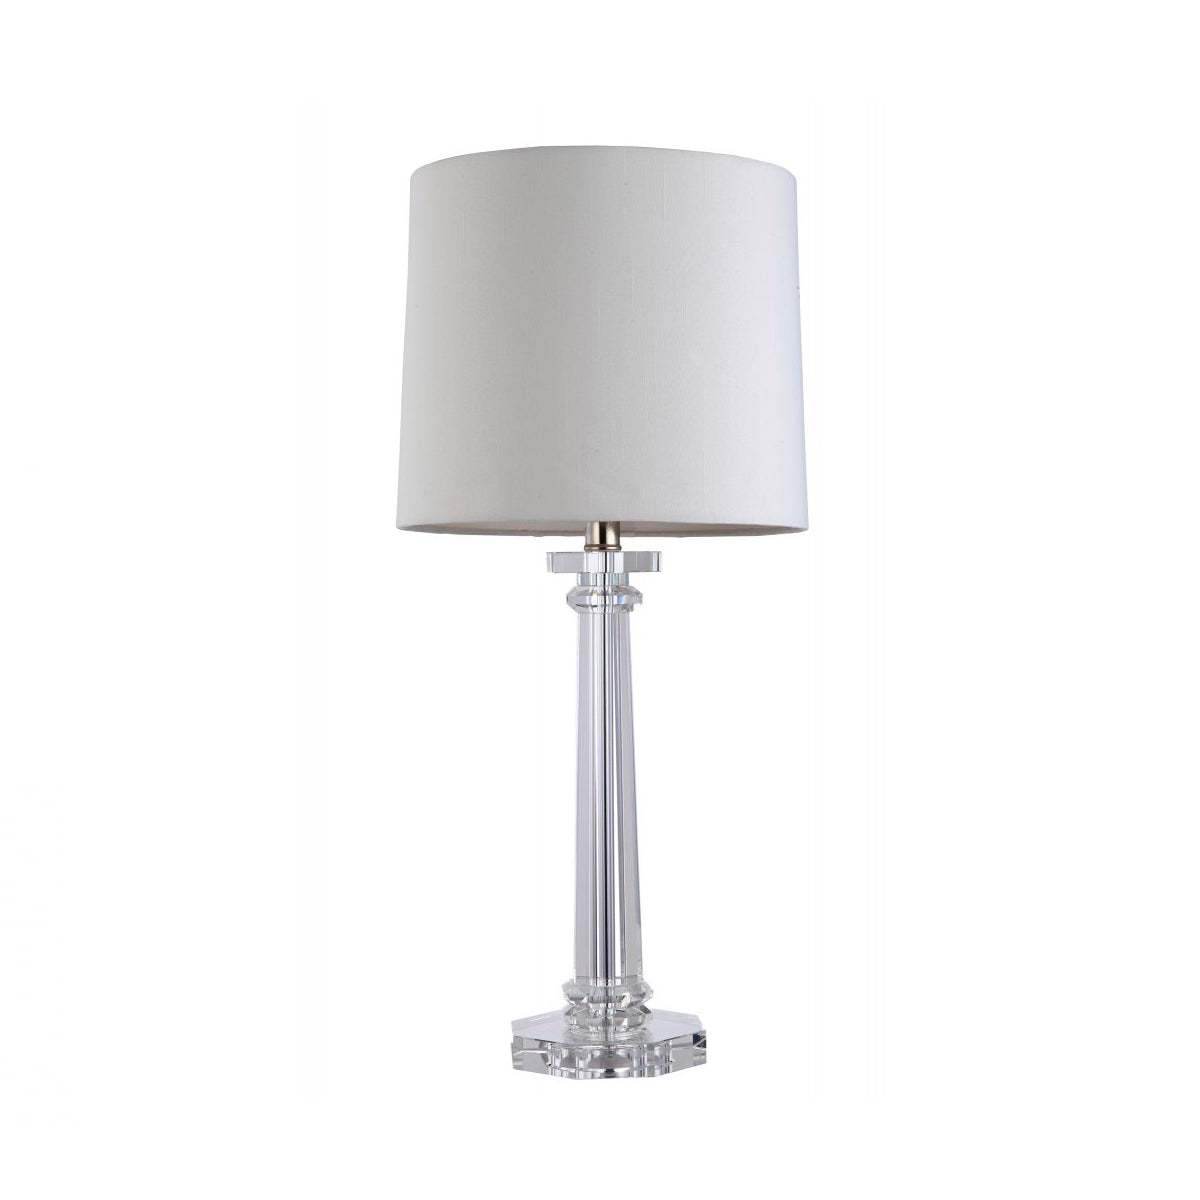 RV Astley Colinas Table Lamp